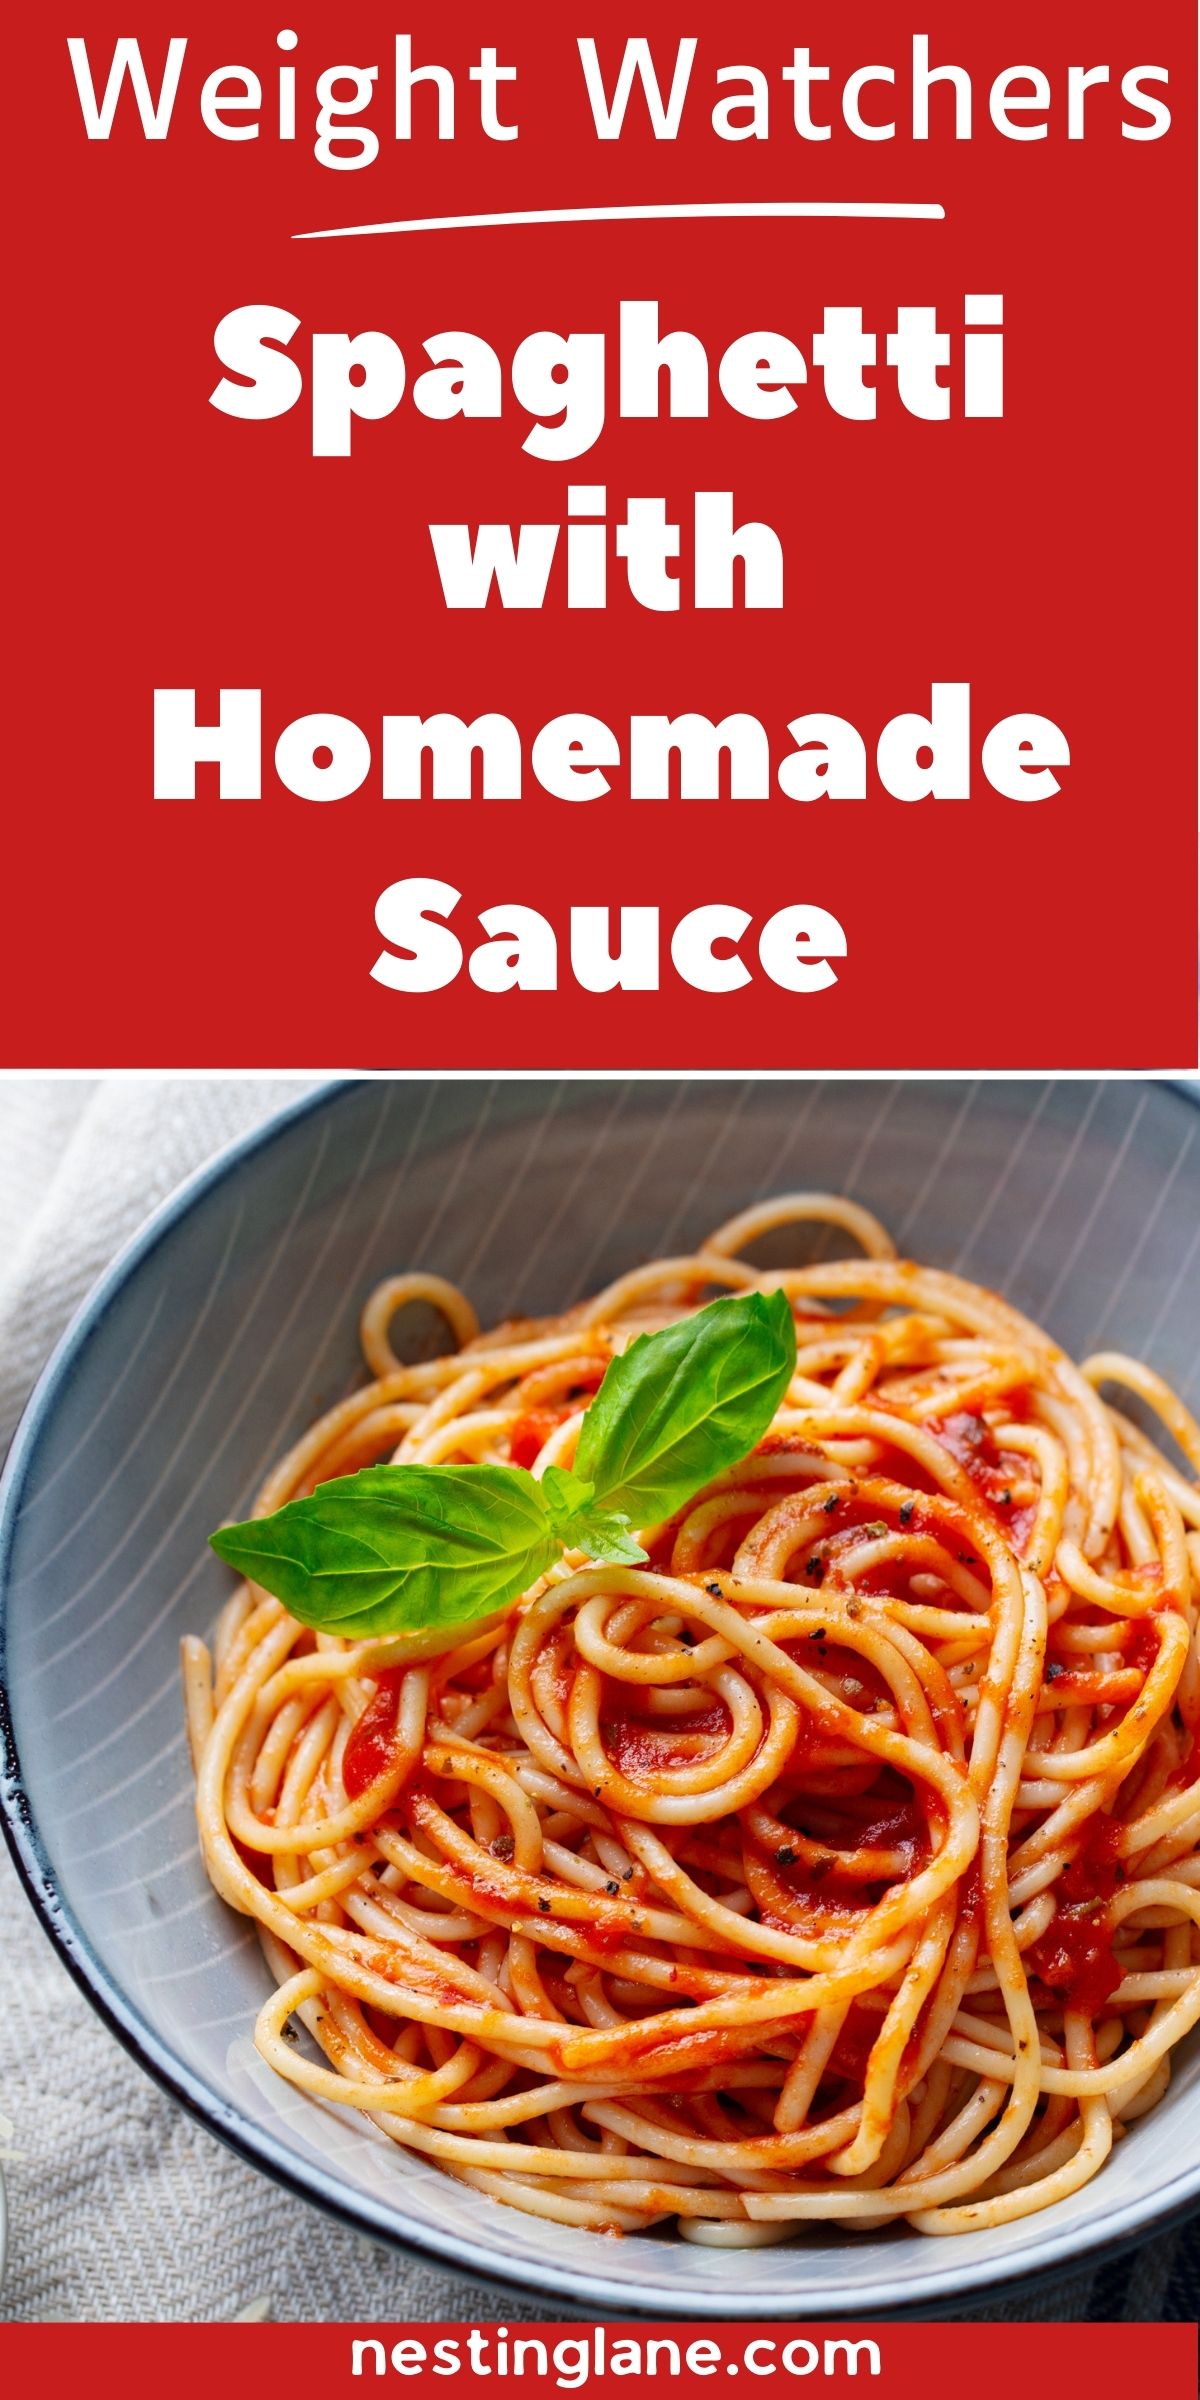 Spaghetti And Homemade Sauce graphic.